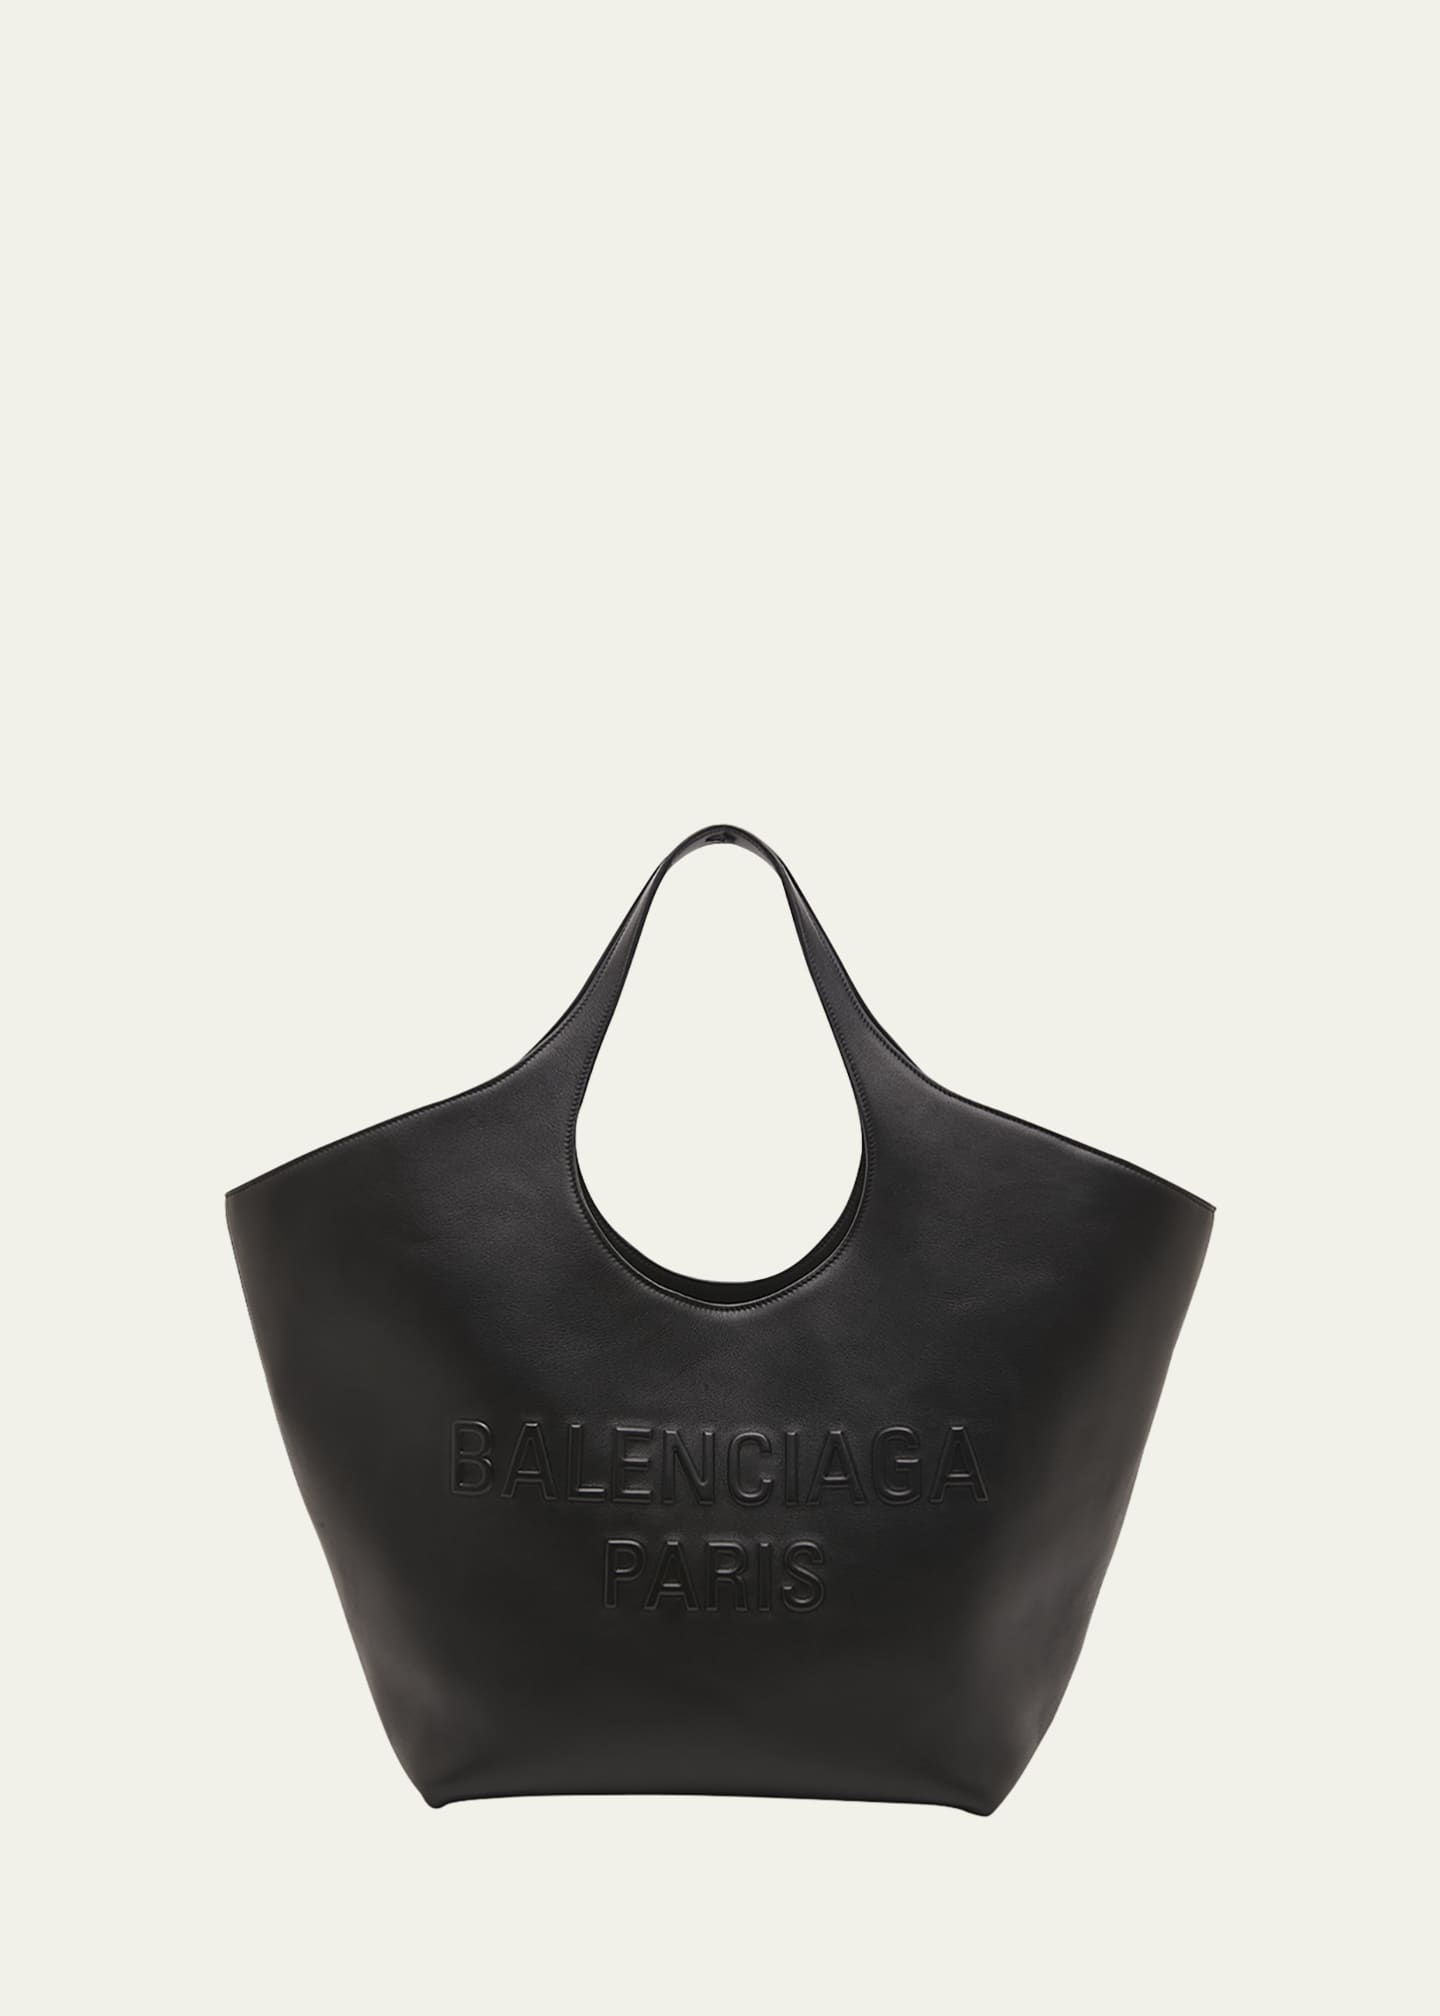 Mary Kate Leather Tote Bag in Black - Balenciaga